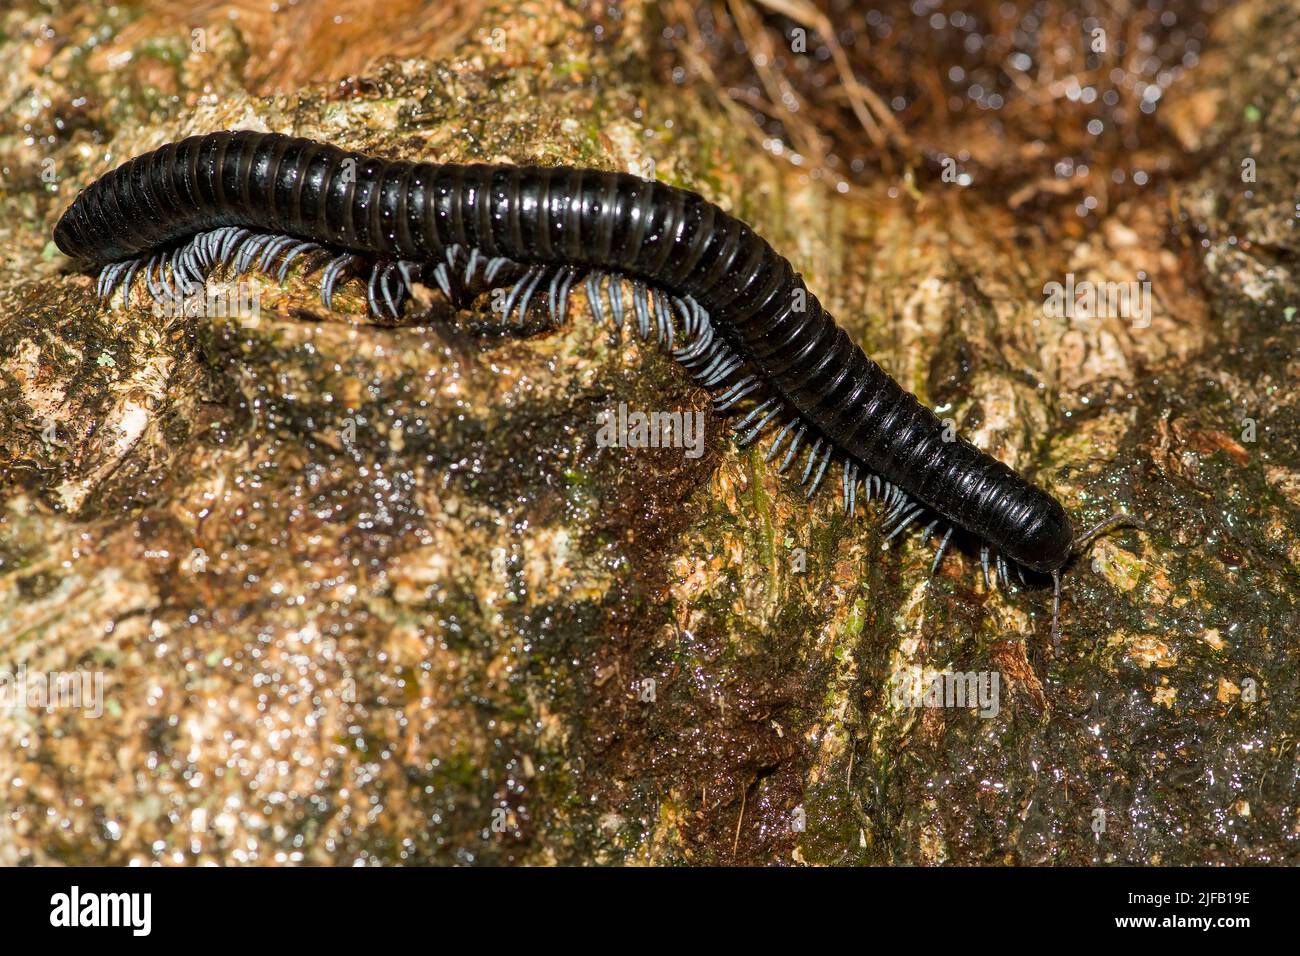 Giant millipede (possibly Archispirostreptus sp.) from Ranomafana National Park, Madagascar. Stock Photo